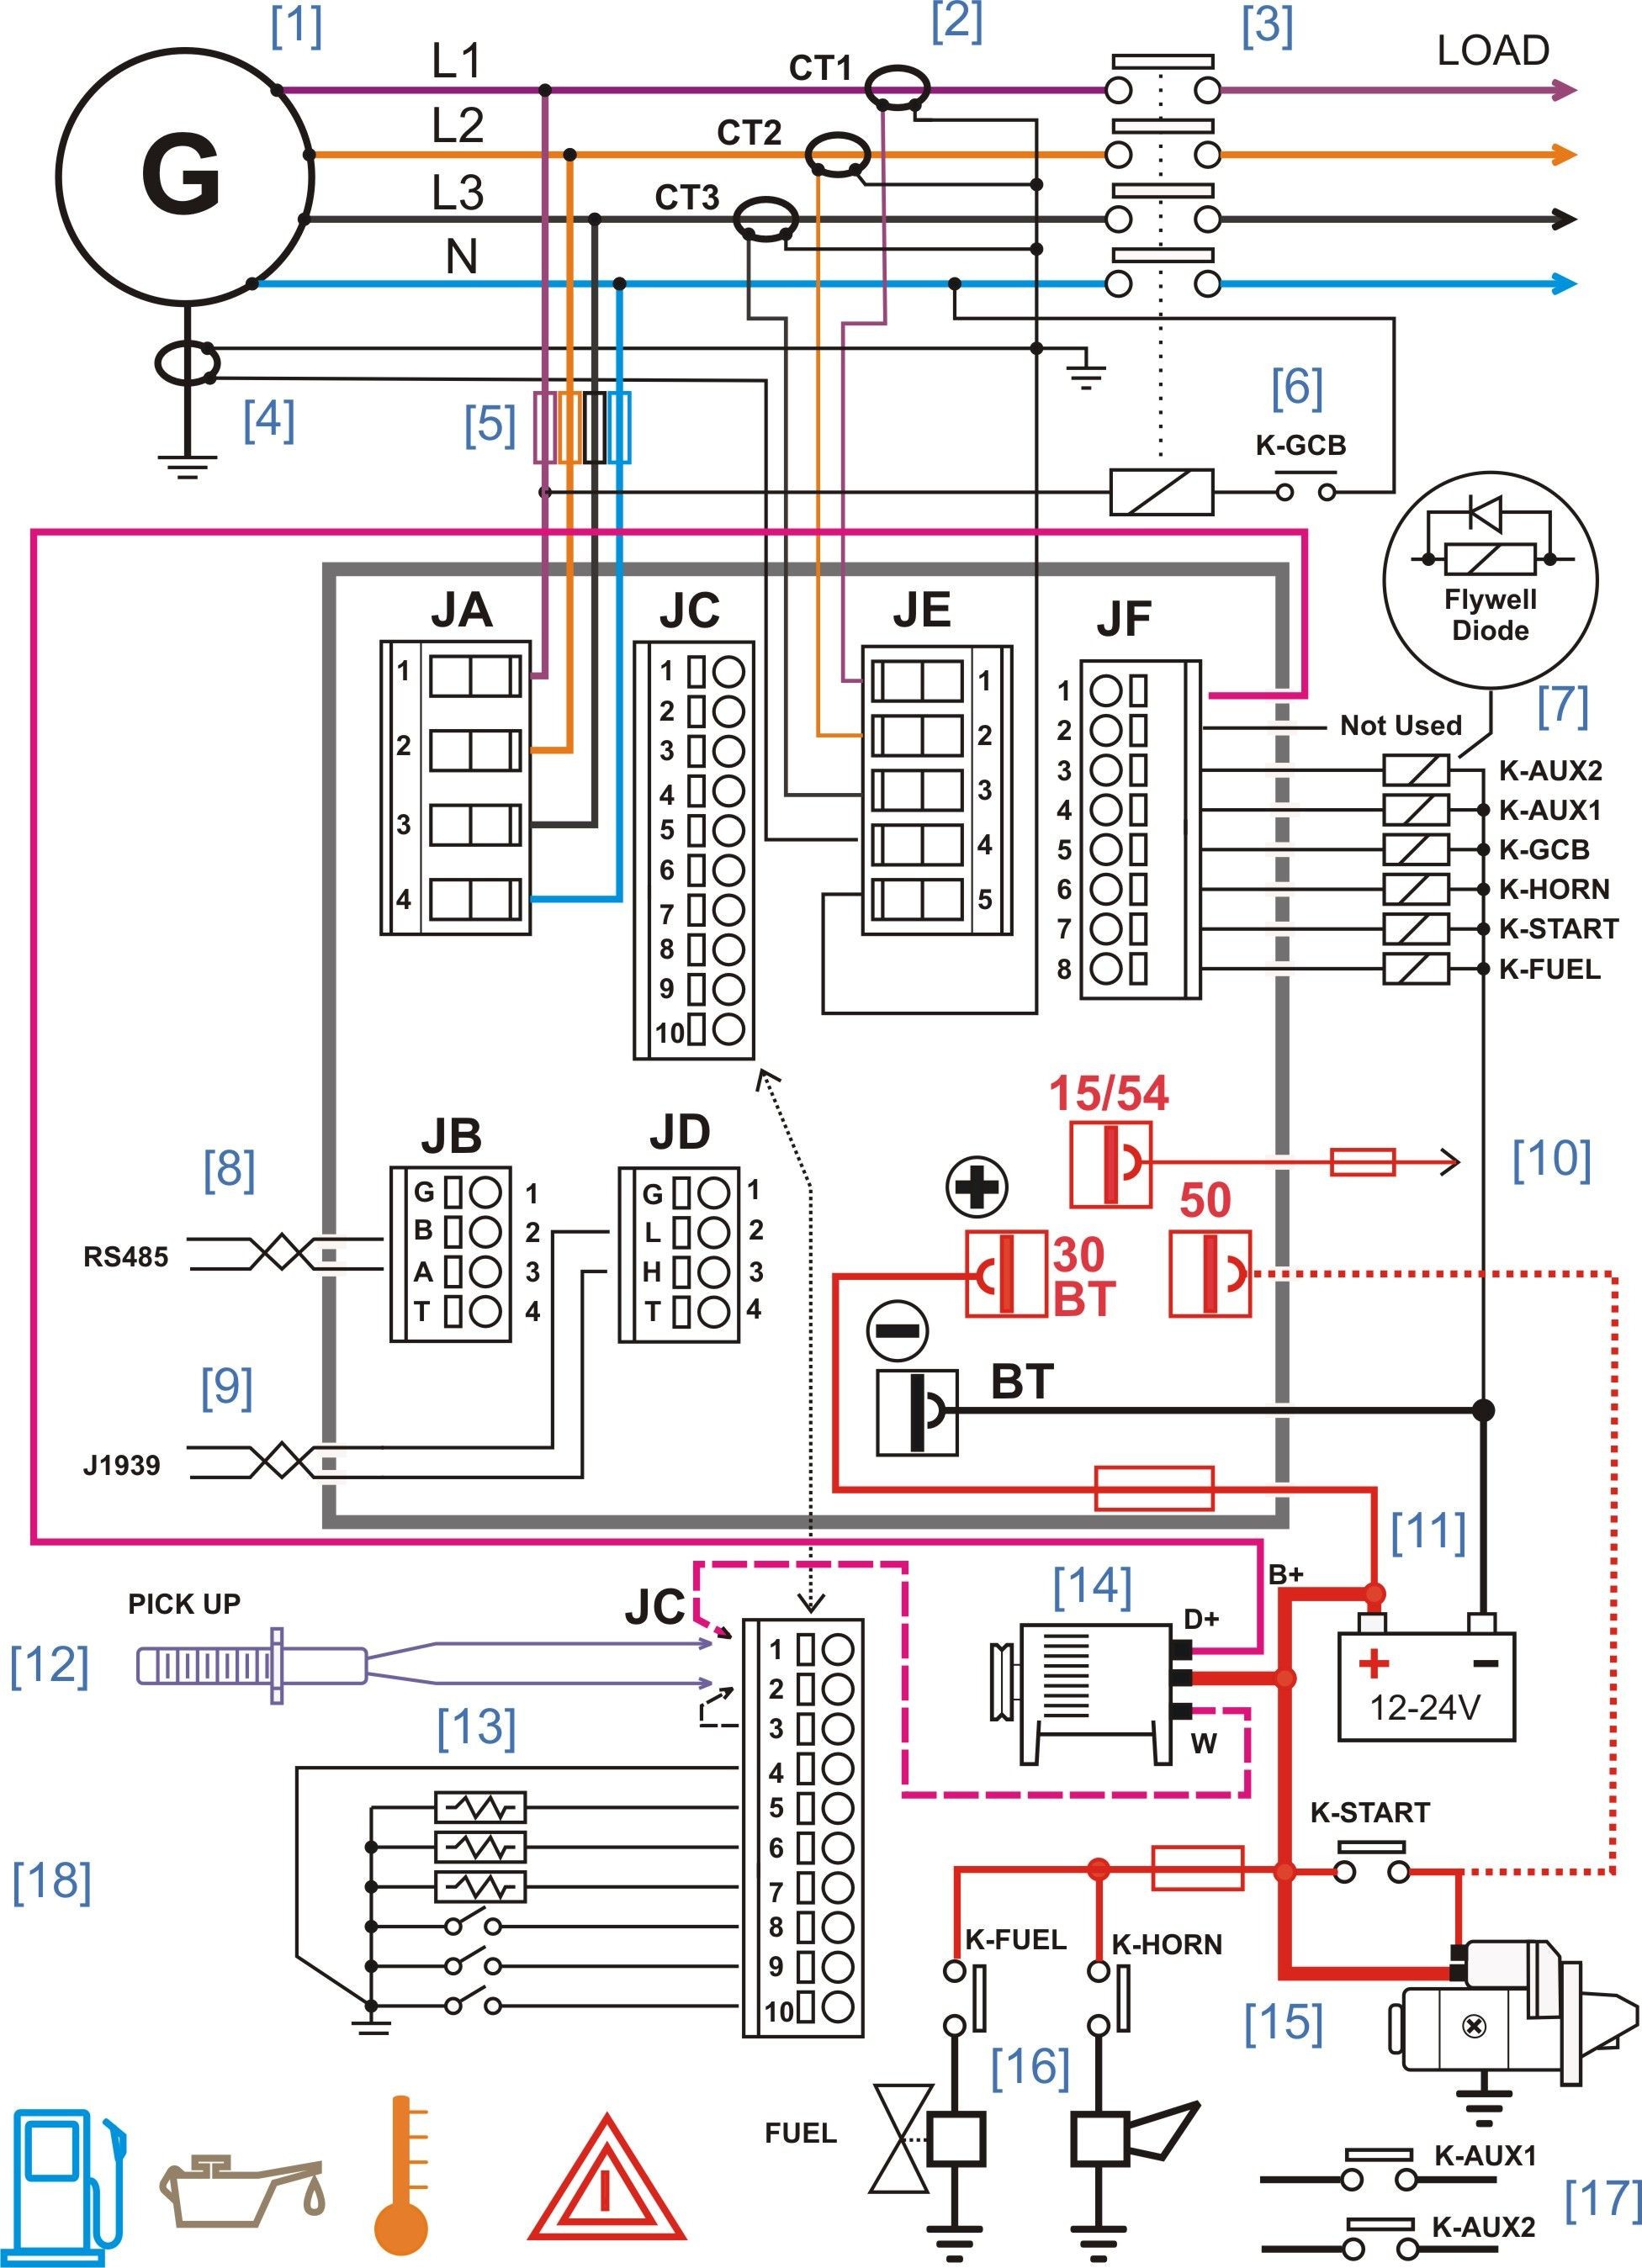 Home Electrical Wiring Diagram Elegant Diesel Generator Control Panel Wiring Diagram